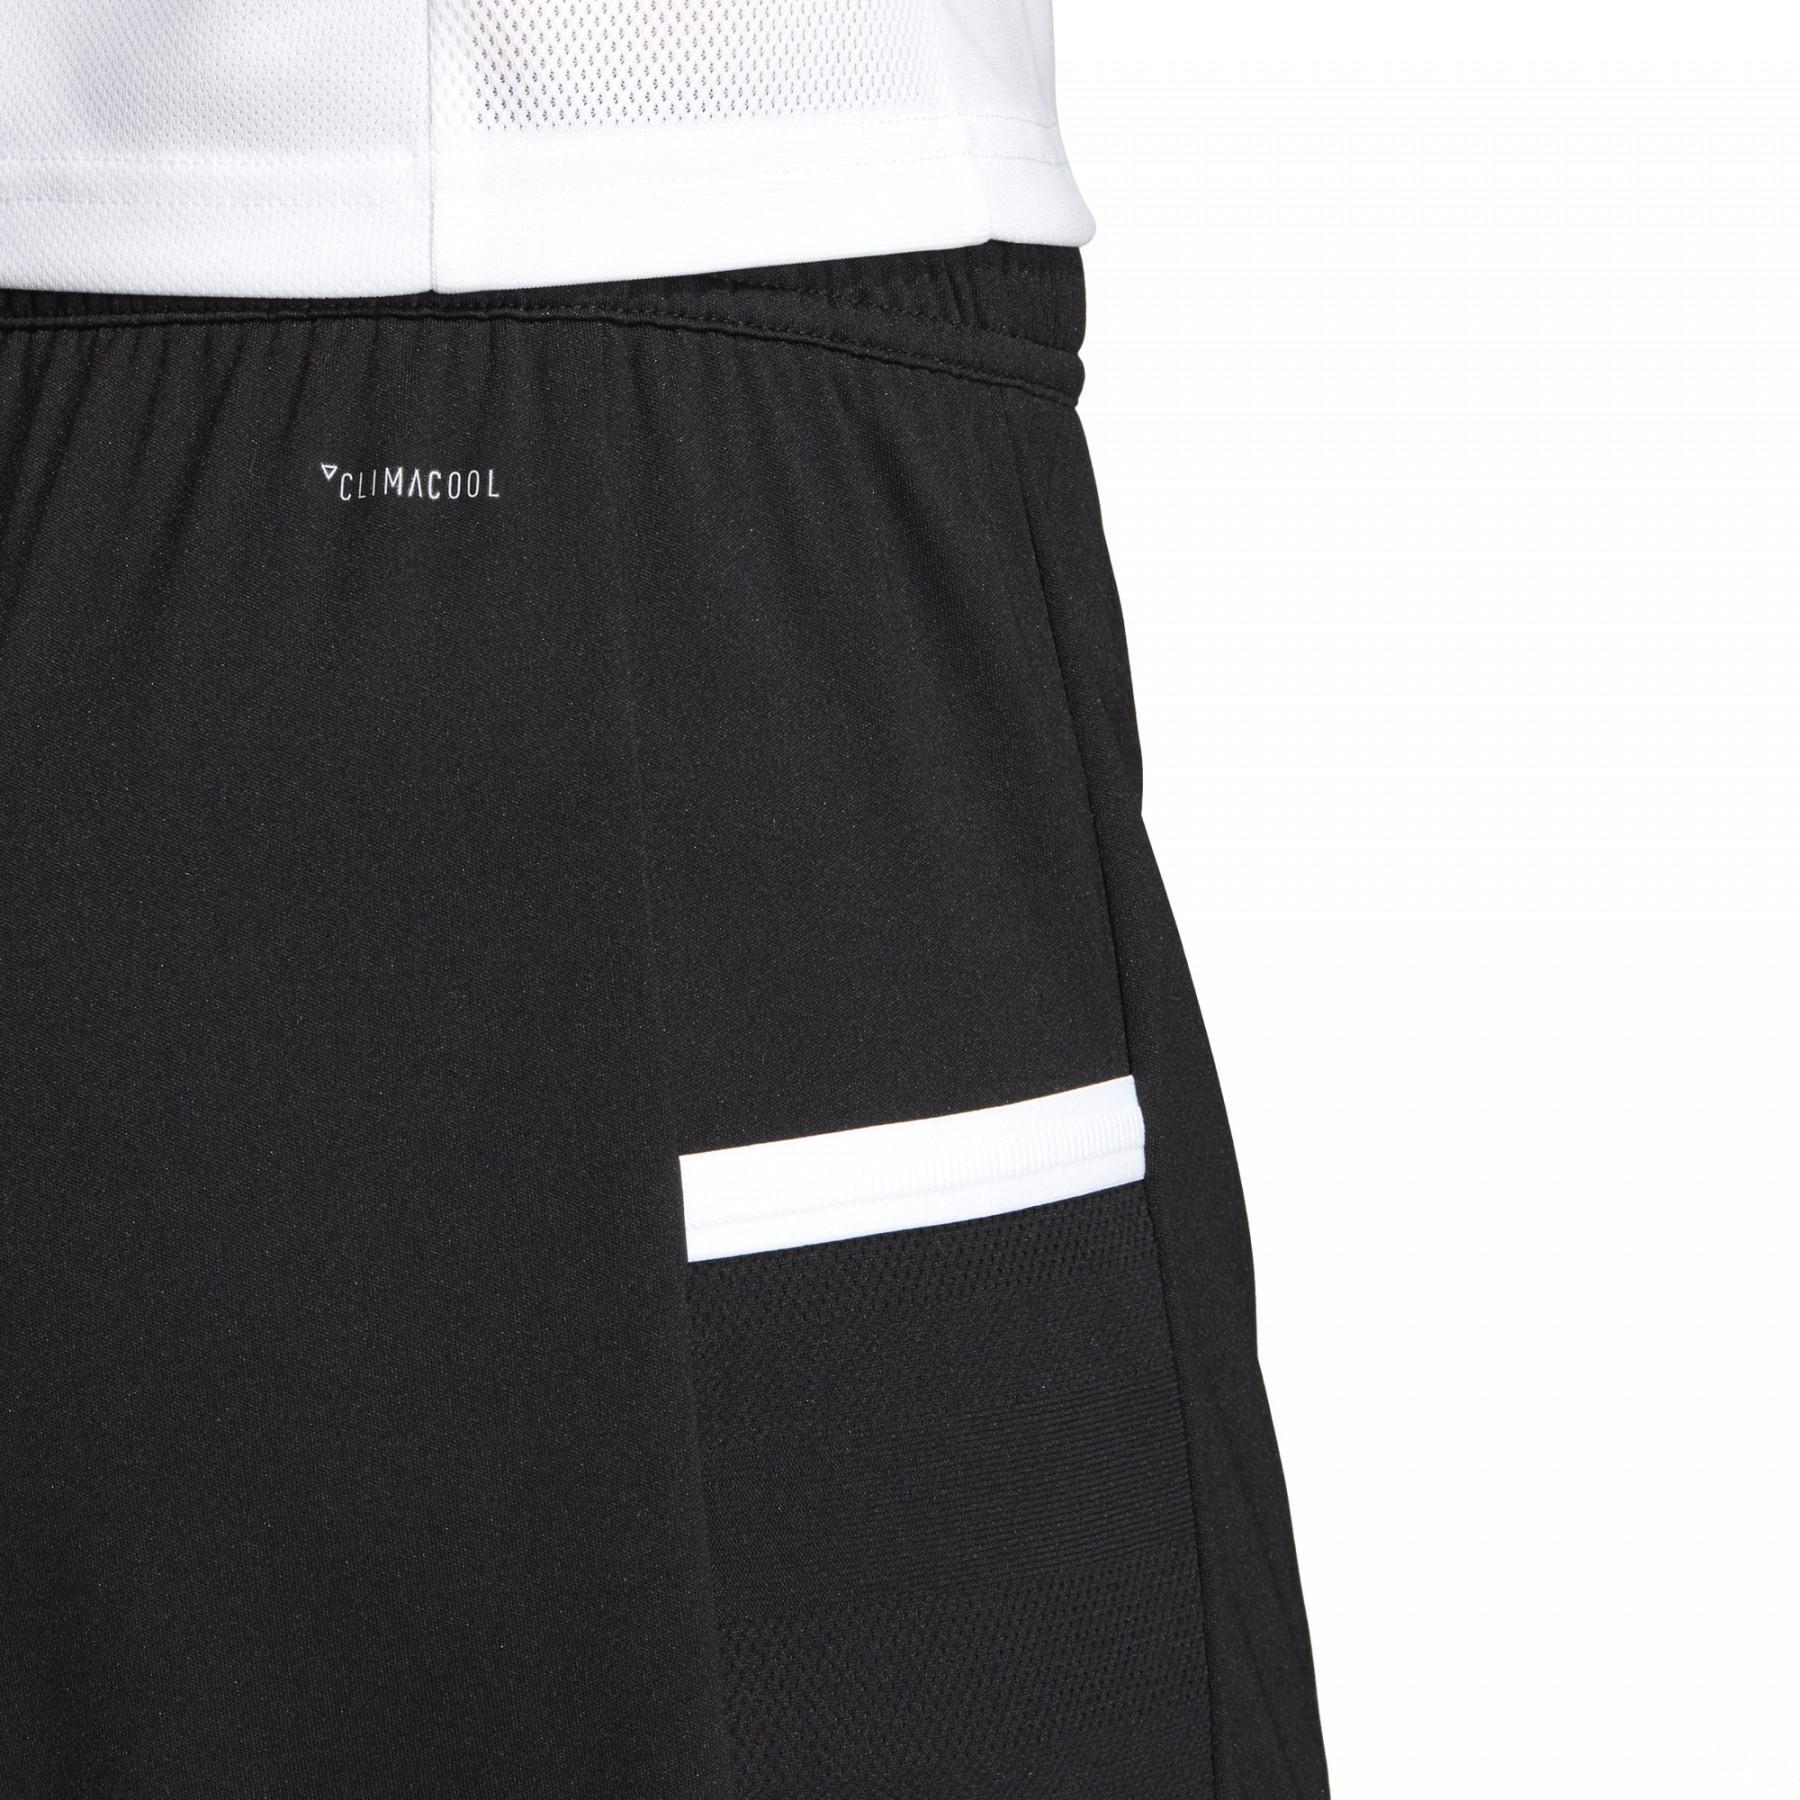 Damen-Shorts adidas Team 19